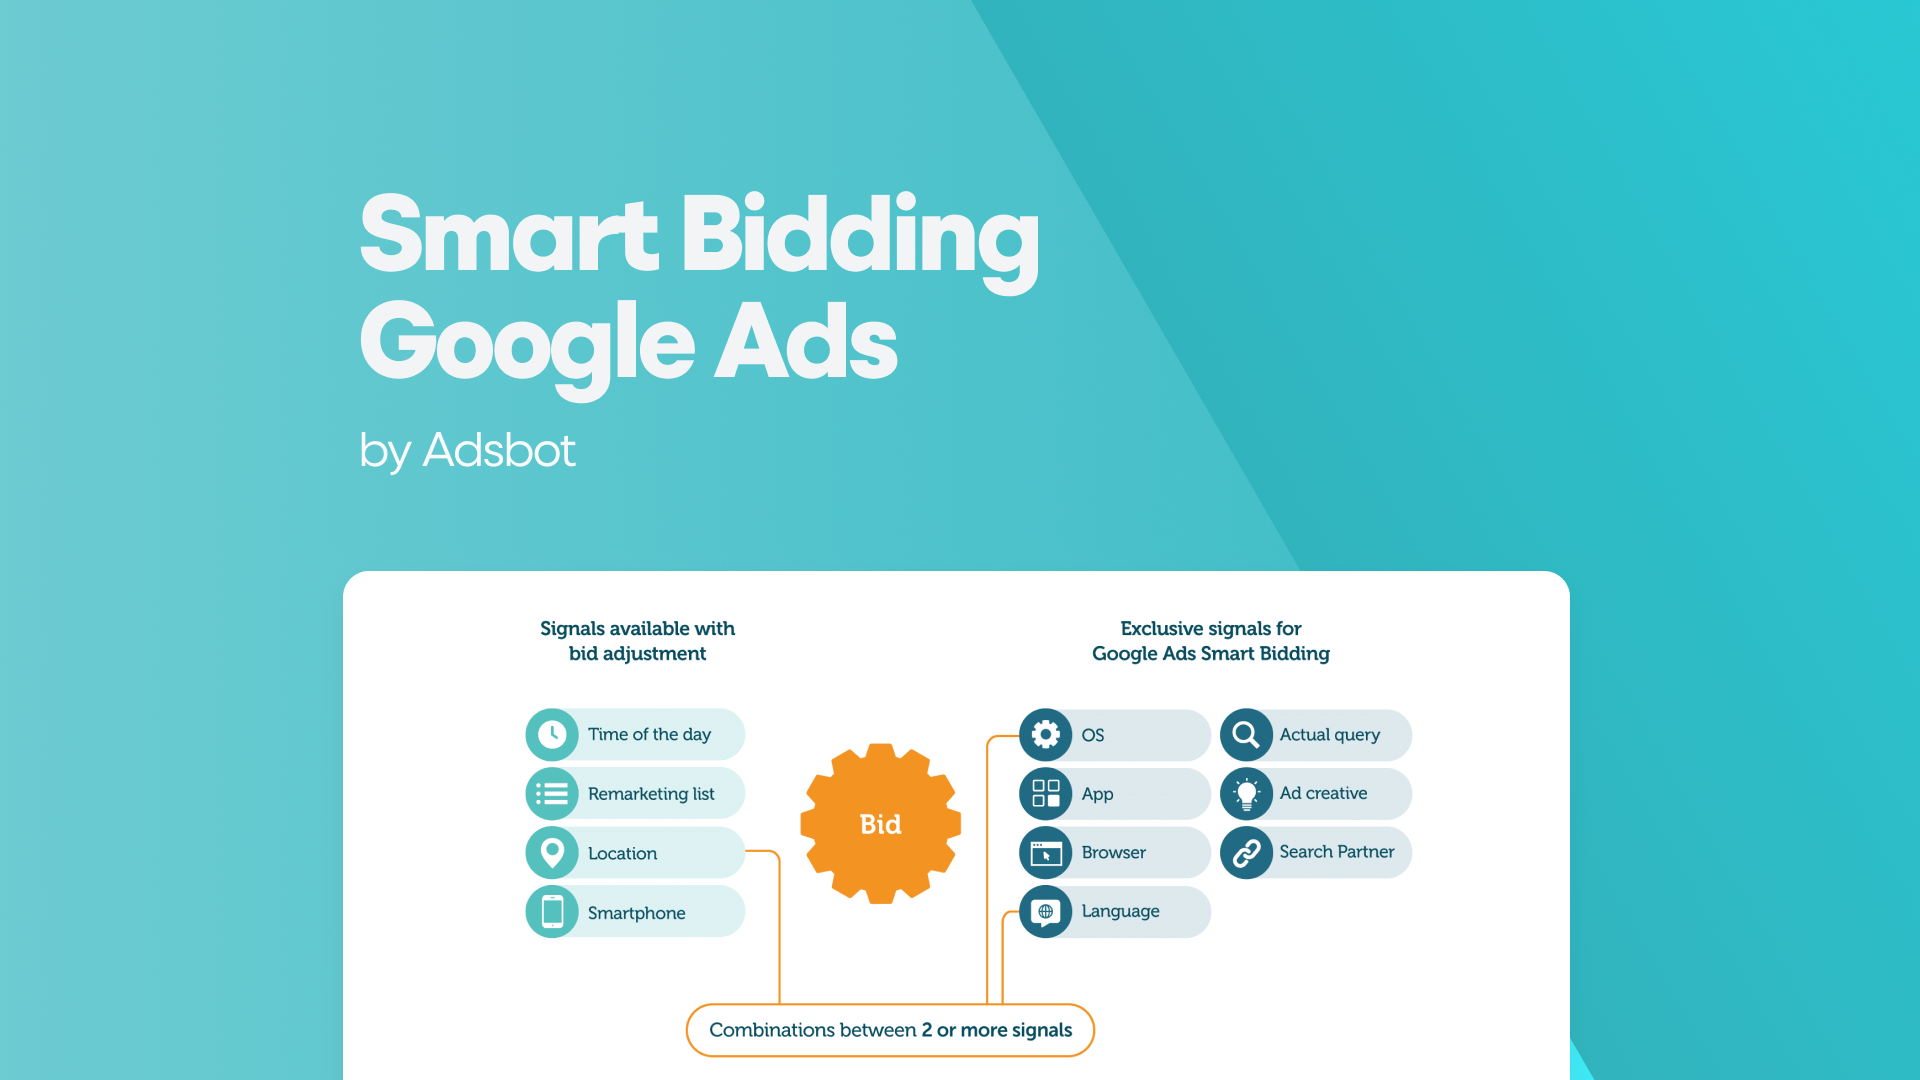 google ads smart bidding